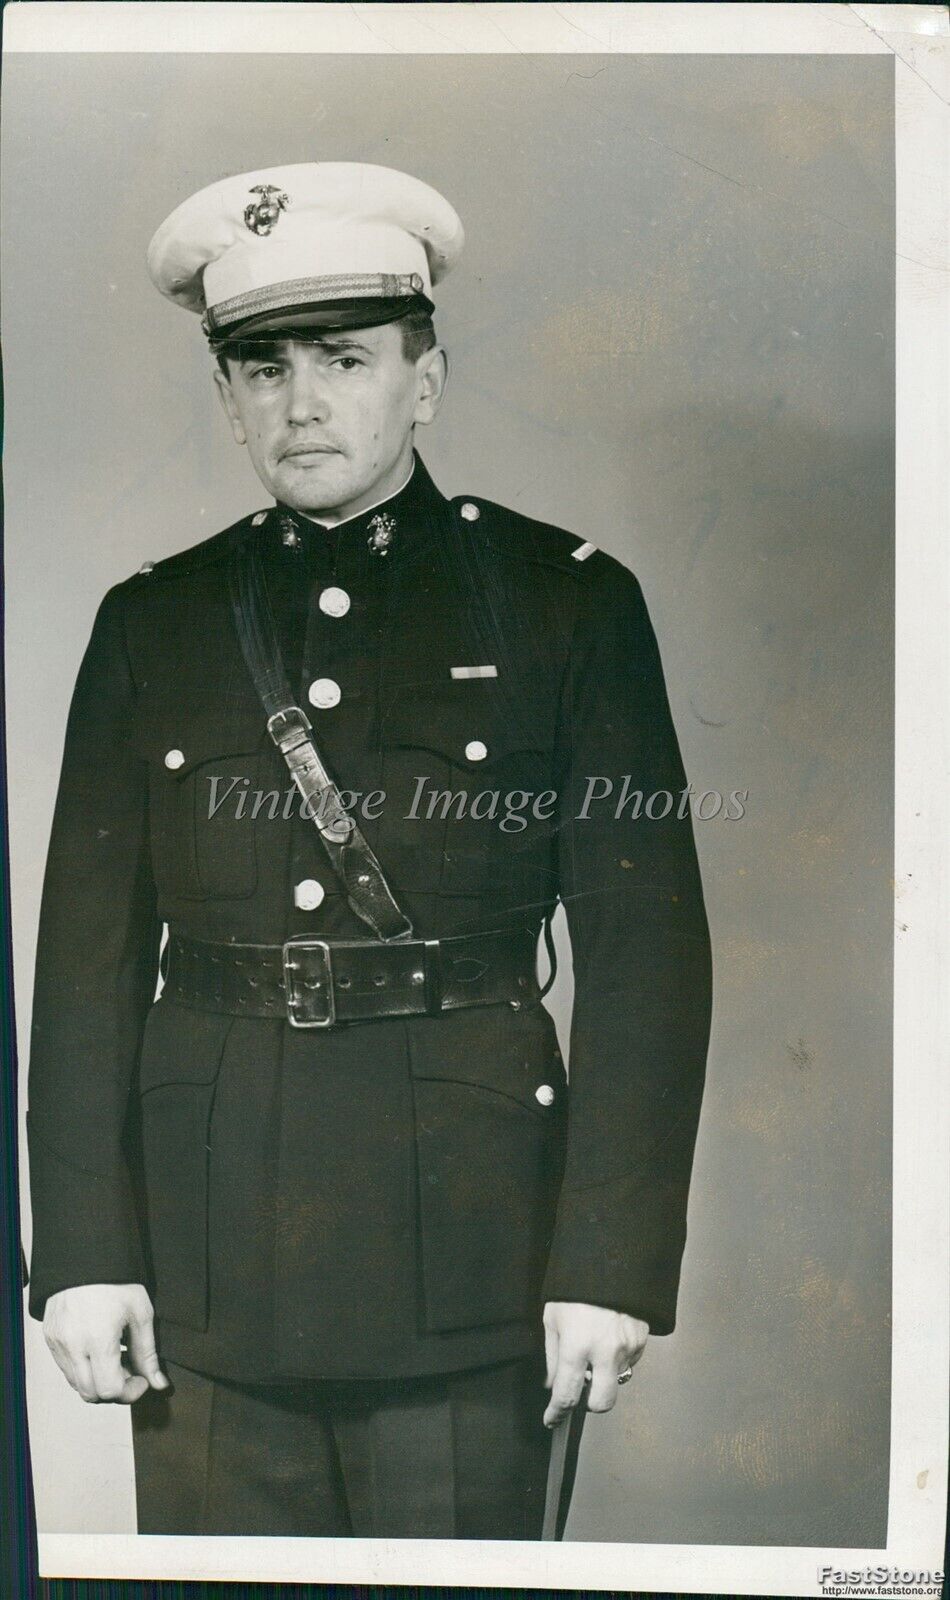 1939 Lieutenant Charles Popp U.S Marine Corps Uniform Military Photo 5X7